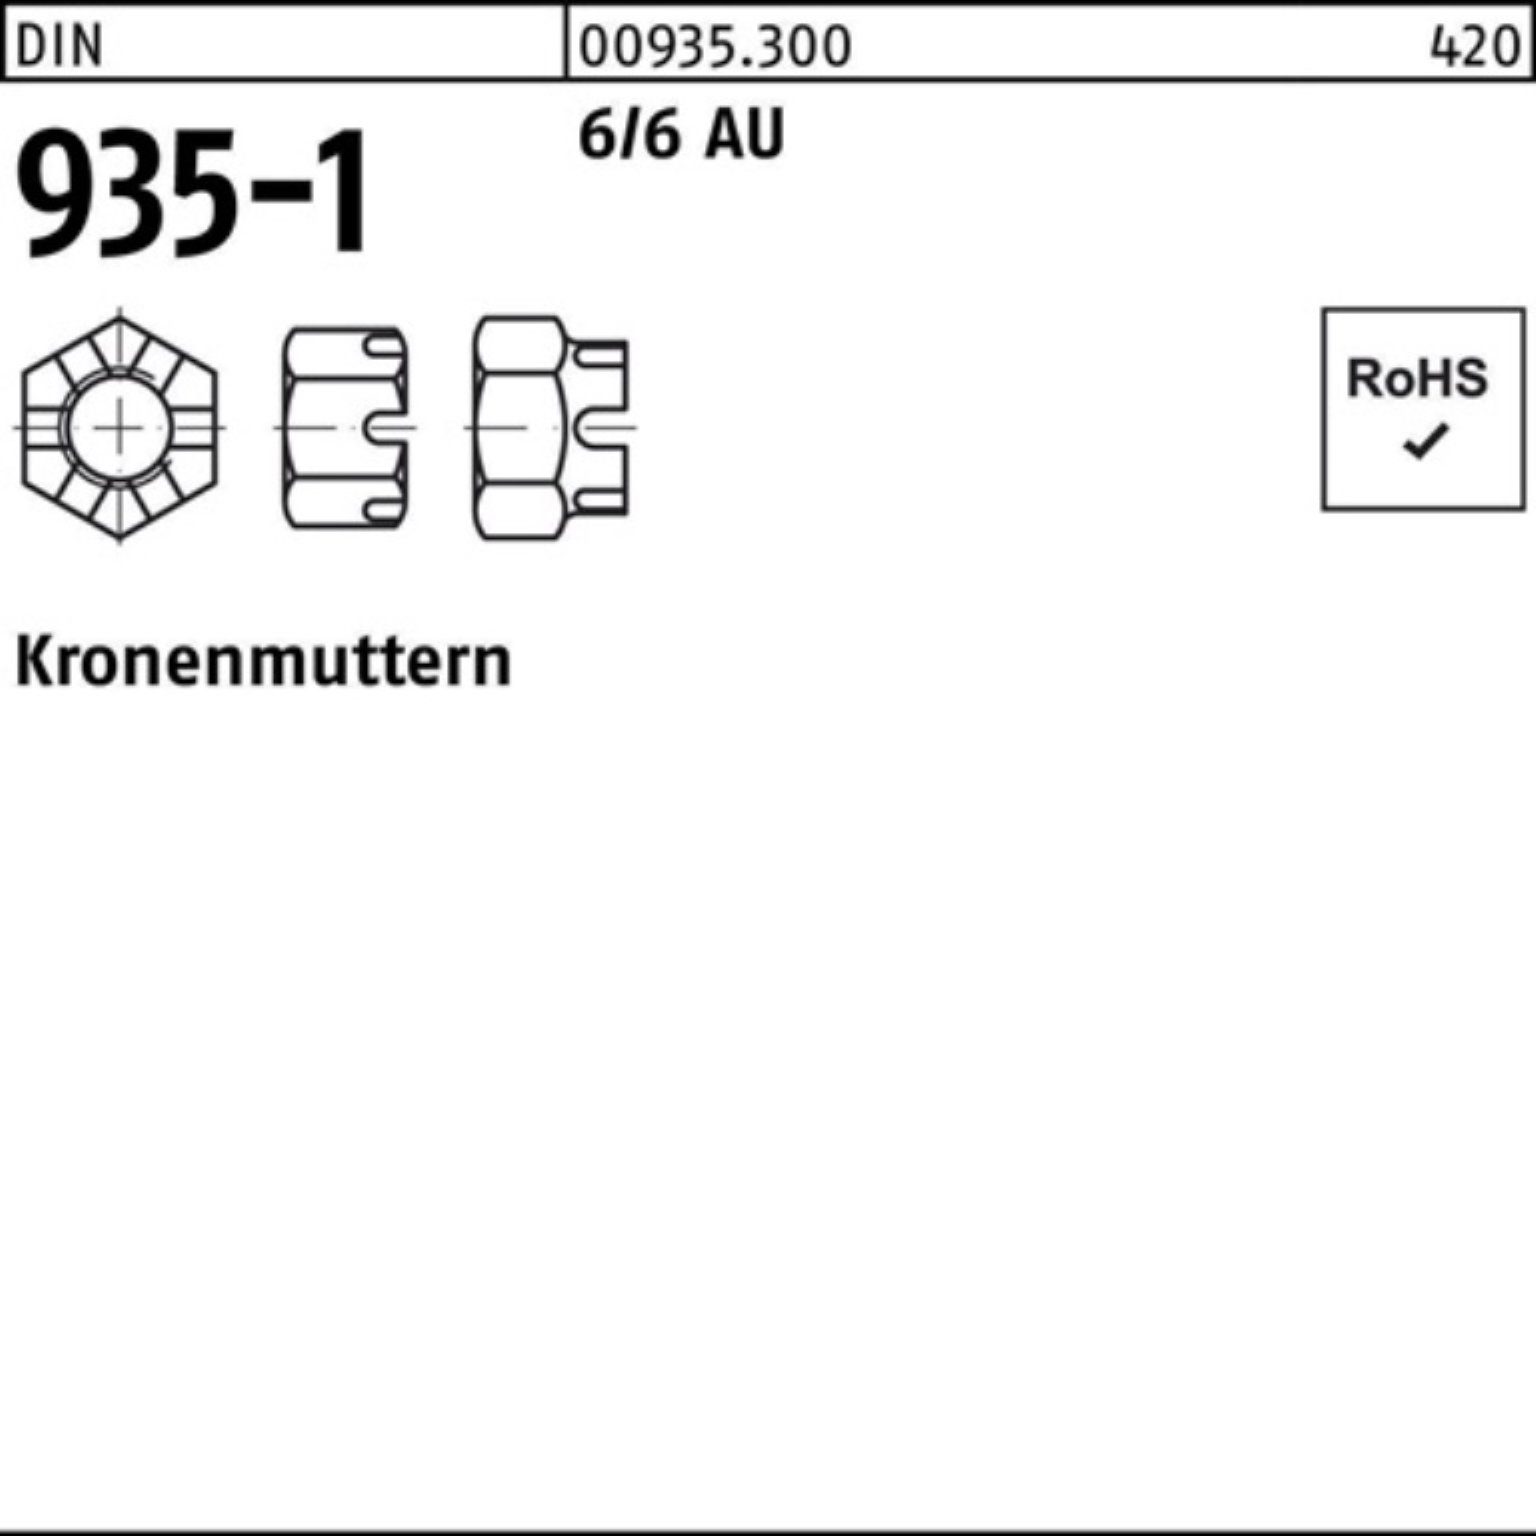 Reyher Kronenmutter 100er Pack Kronenmutter Automatenstahl Stü 50 DIN 6/6 22 935-1 SW M14